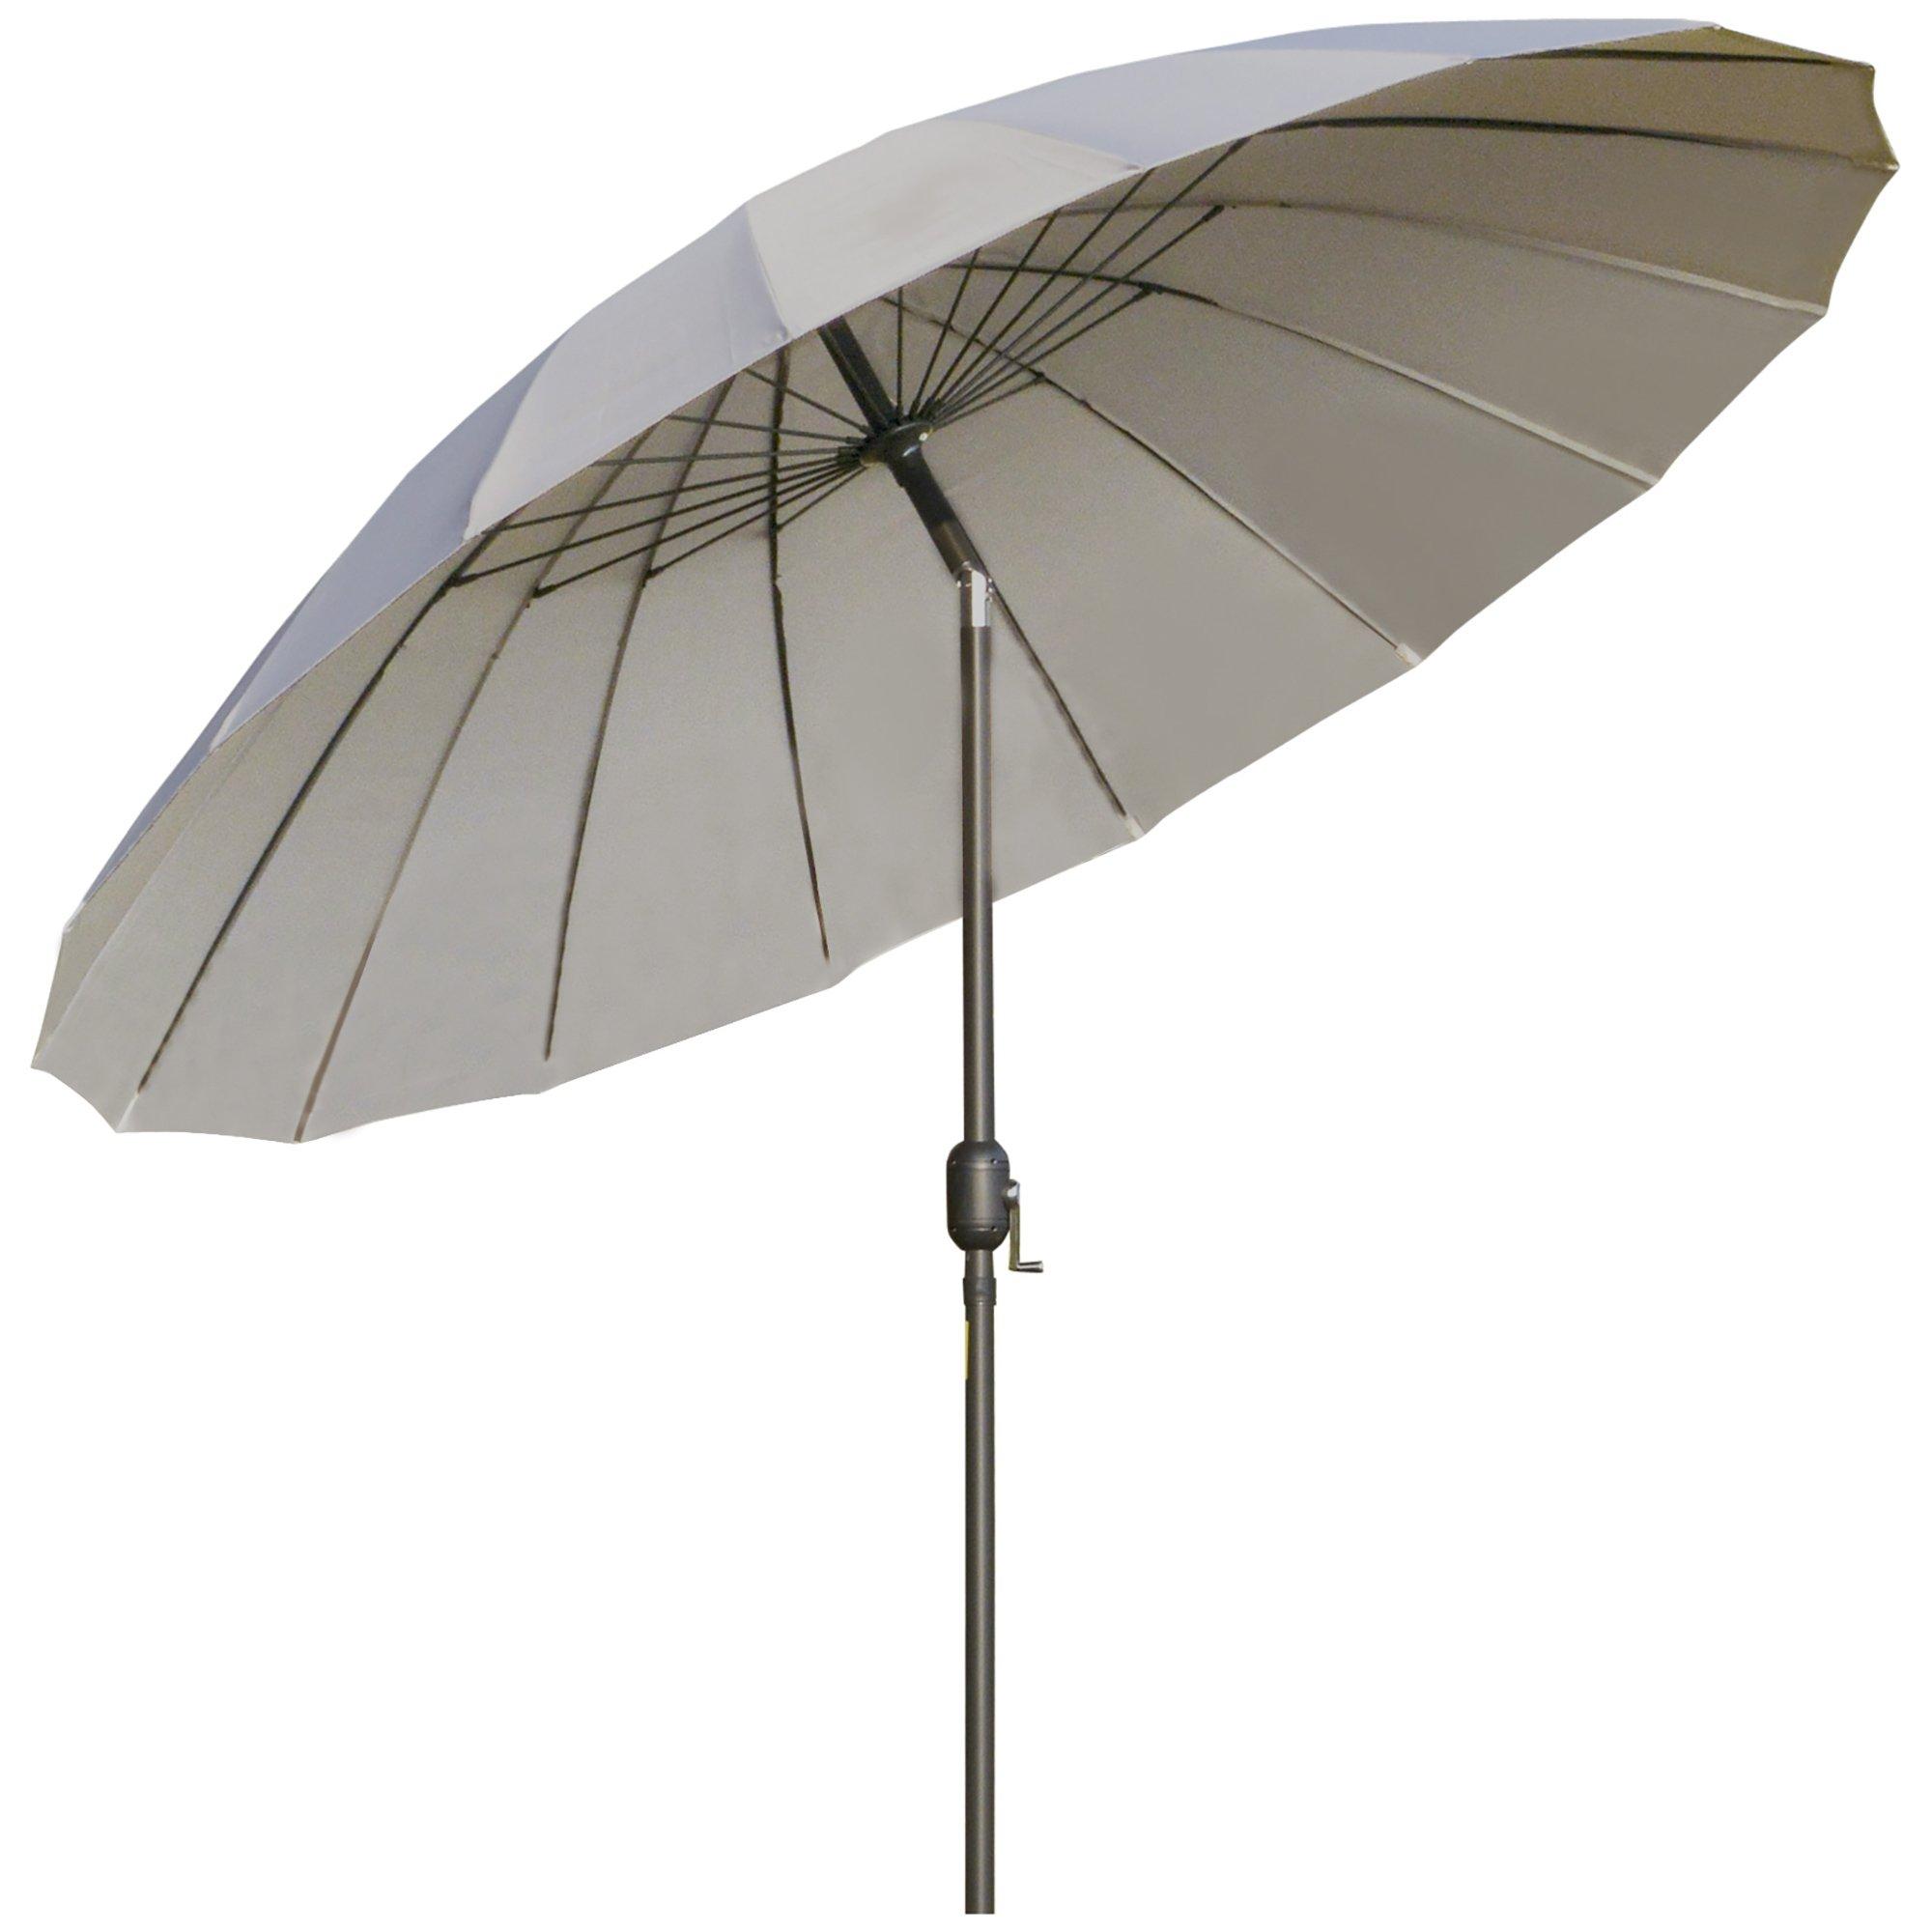 2.5m Round Curved Adjustable Parasol Sun Umbrella Metal Pole